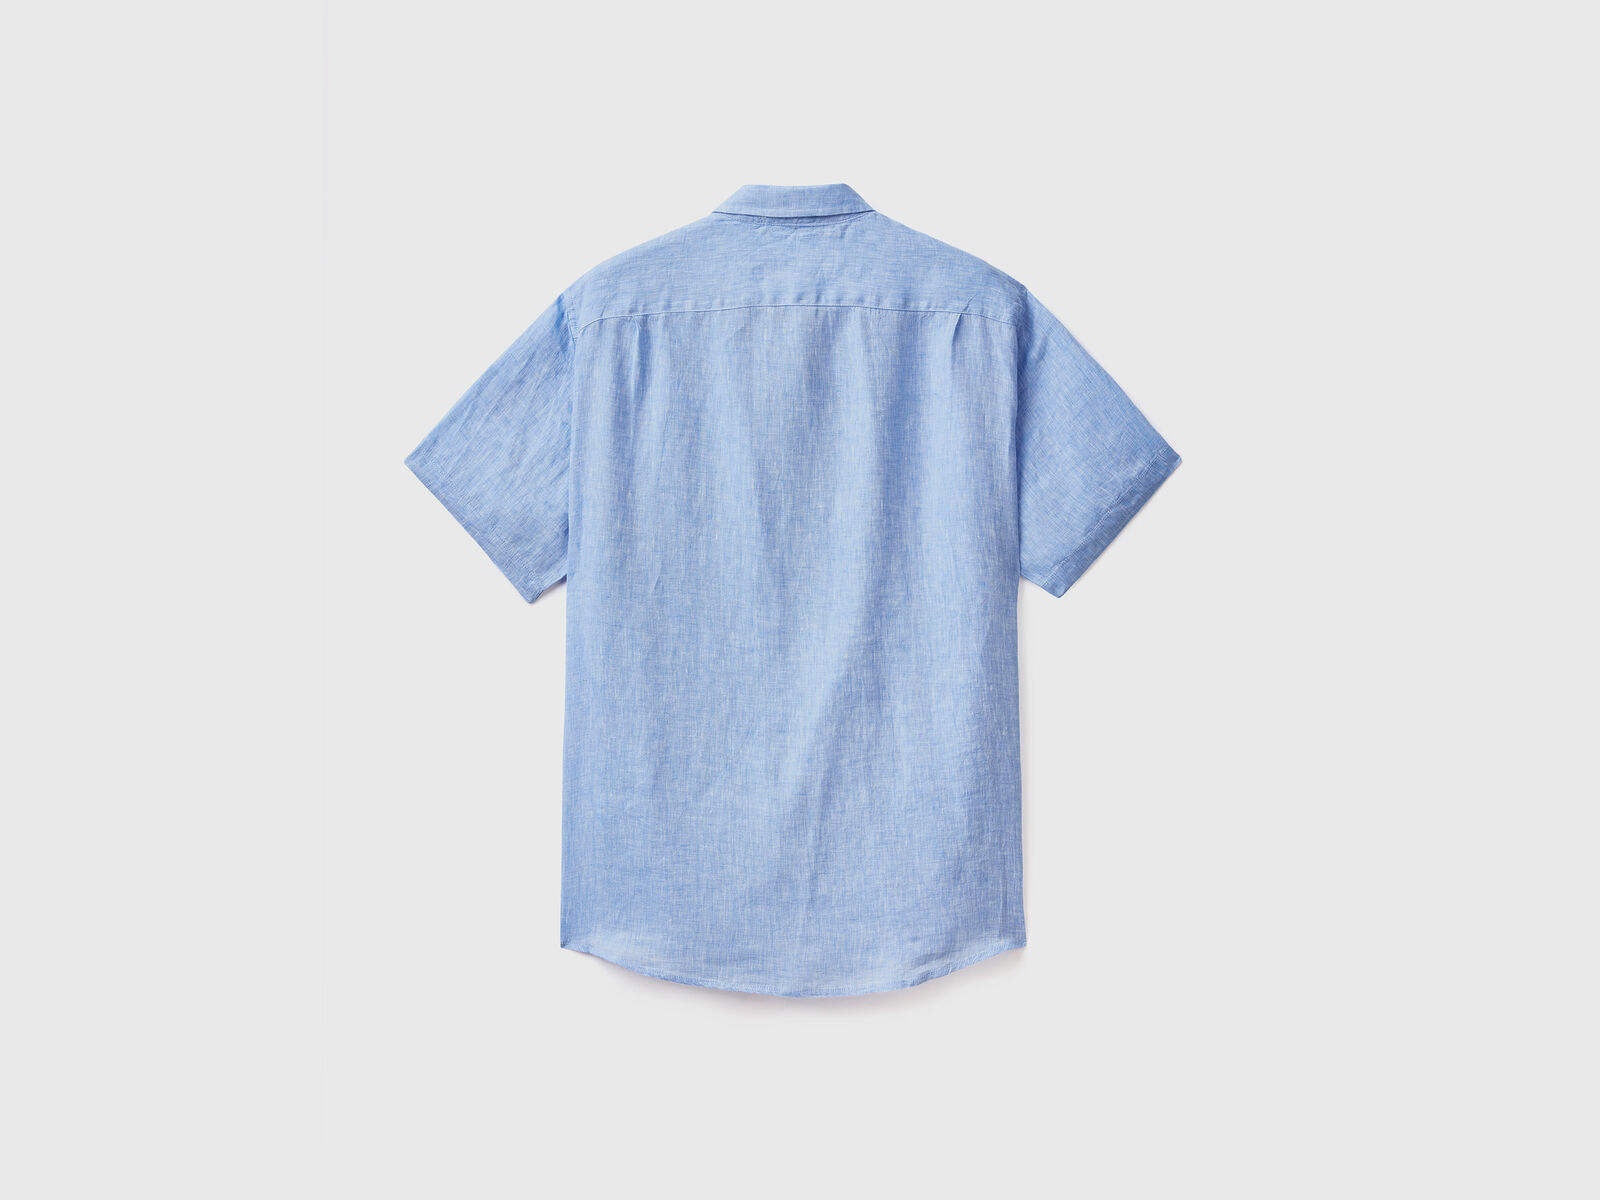 Calida 34000 #700 Light Blue Short Sleeves 100% Cotton Nightshirt